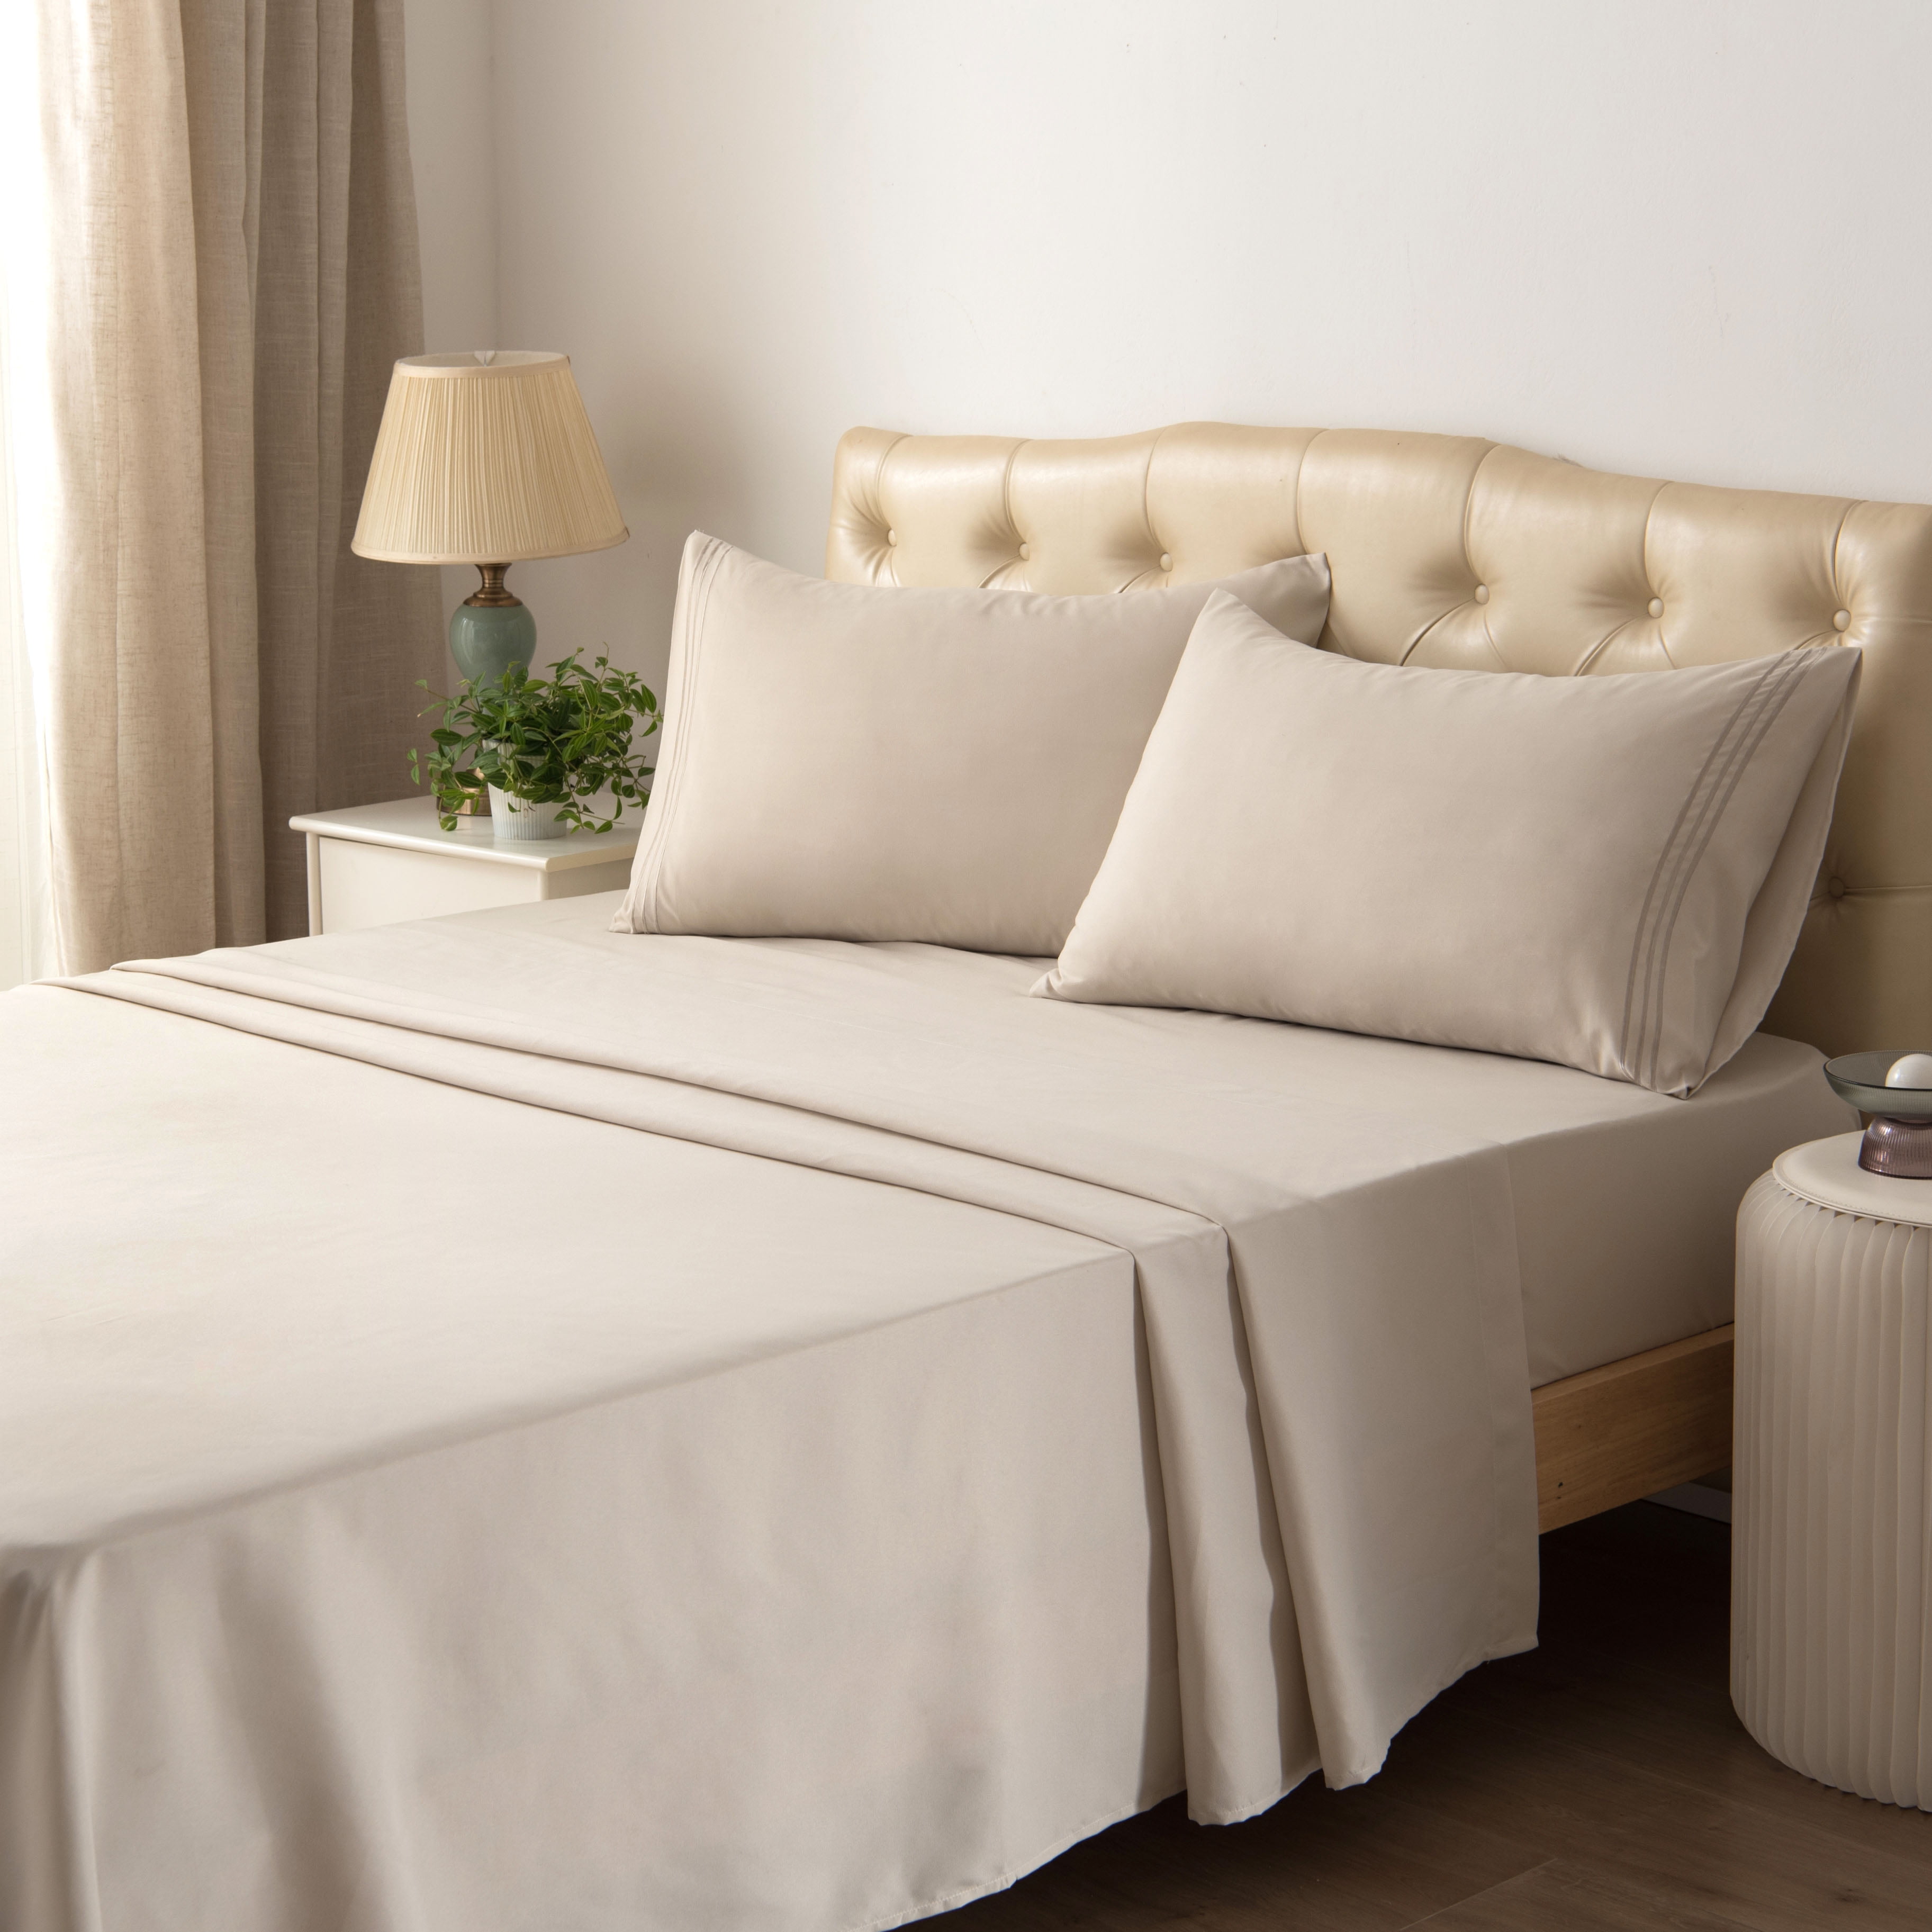 Luxurious 1800 Series Soft 4 Piece Bed Sheet Set Bedding Deep Pocket 16 Inches 